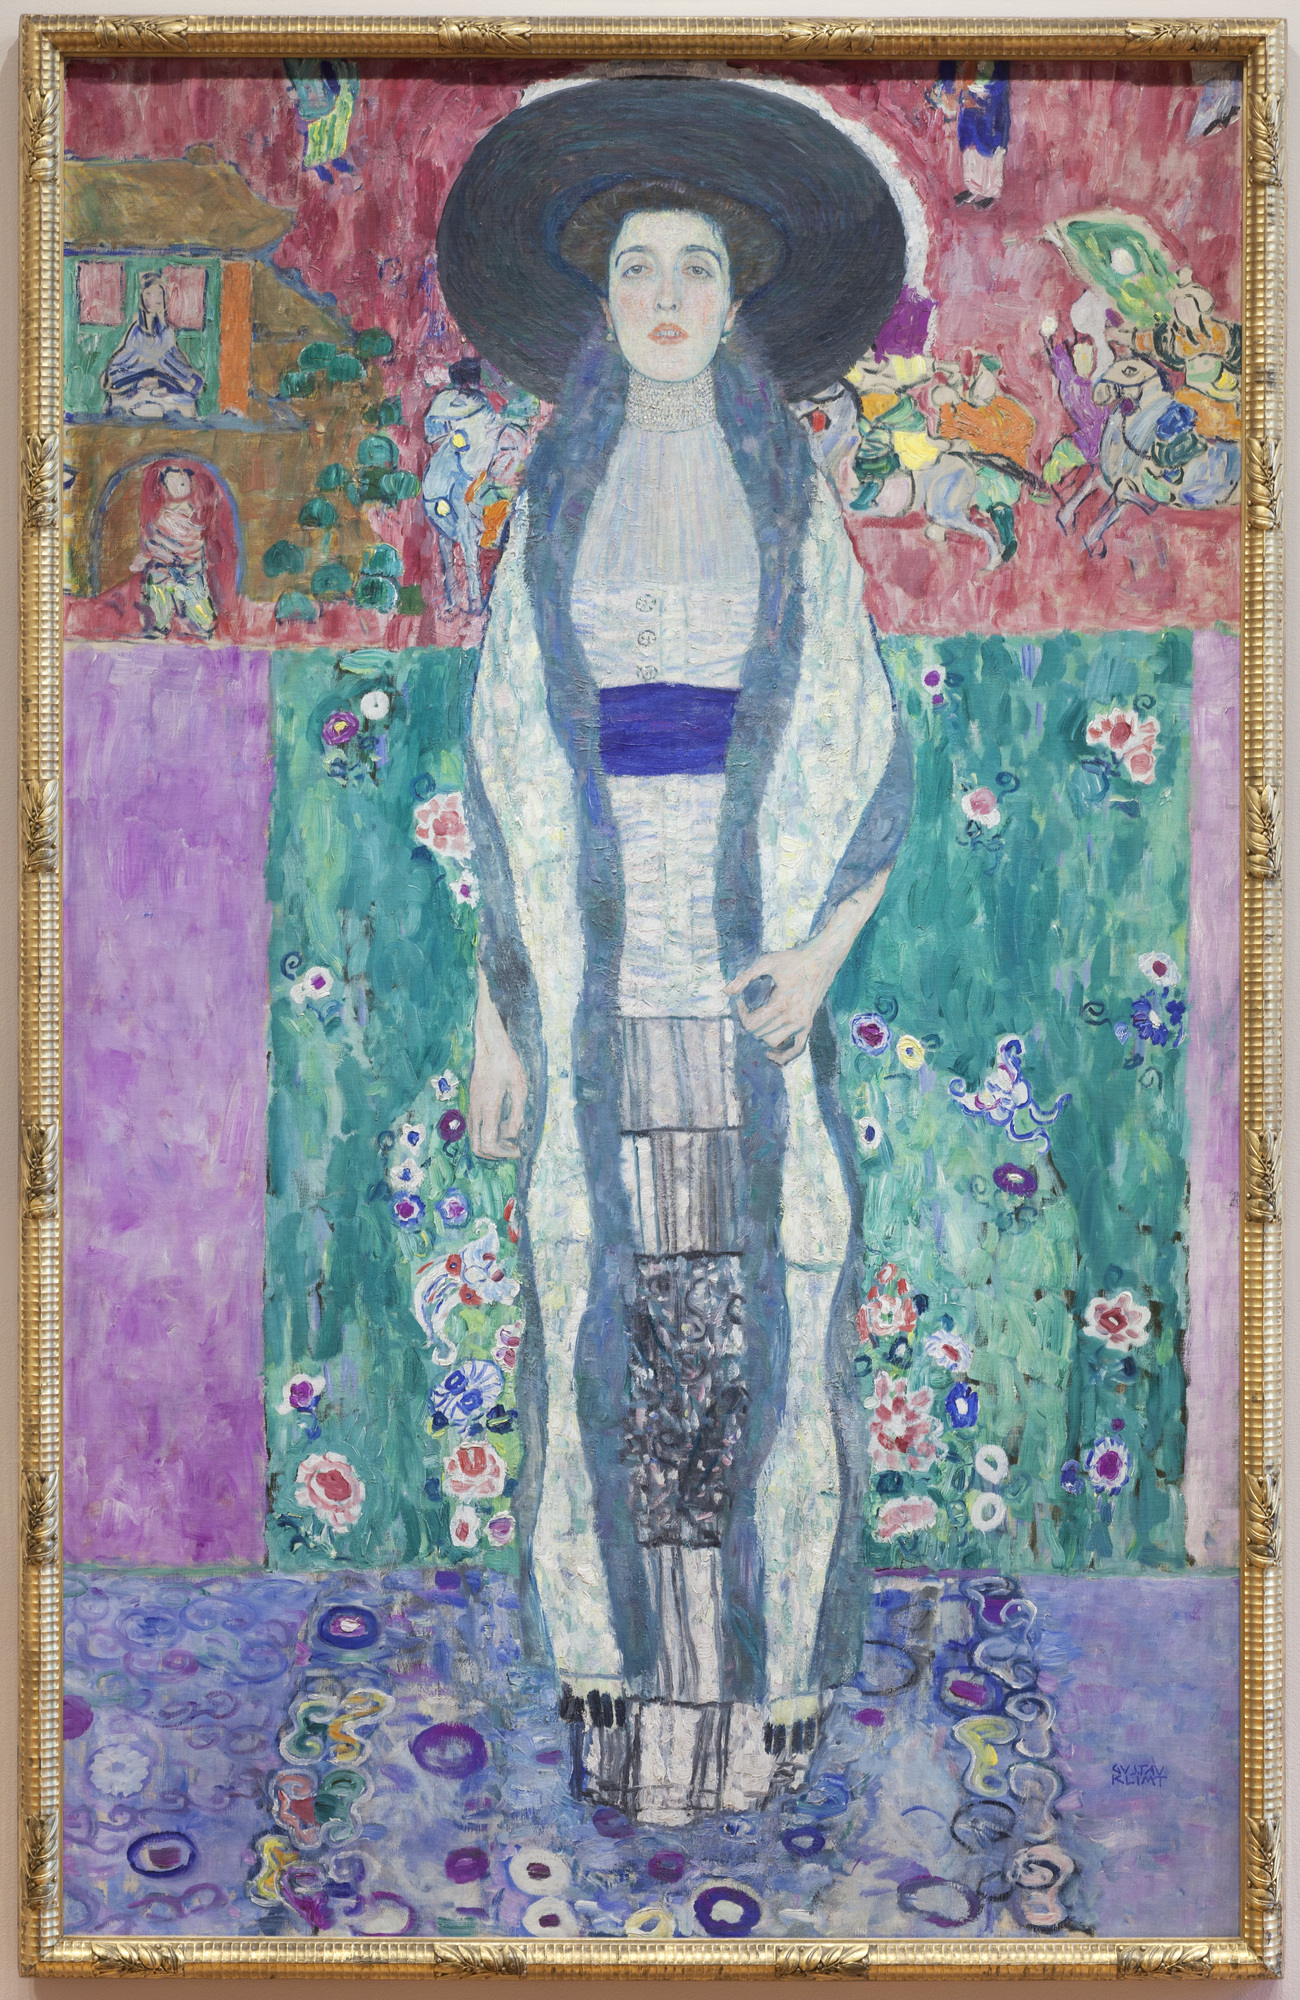 Portrait of Adele Bloch-Bauer II by Gustav Klimt - 1912 - 190 x 120 cm private collection